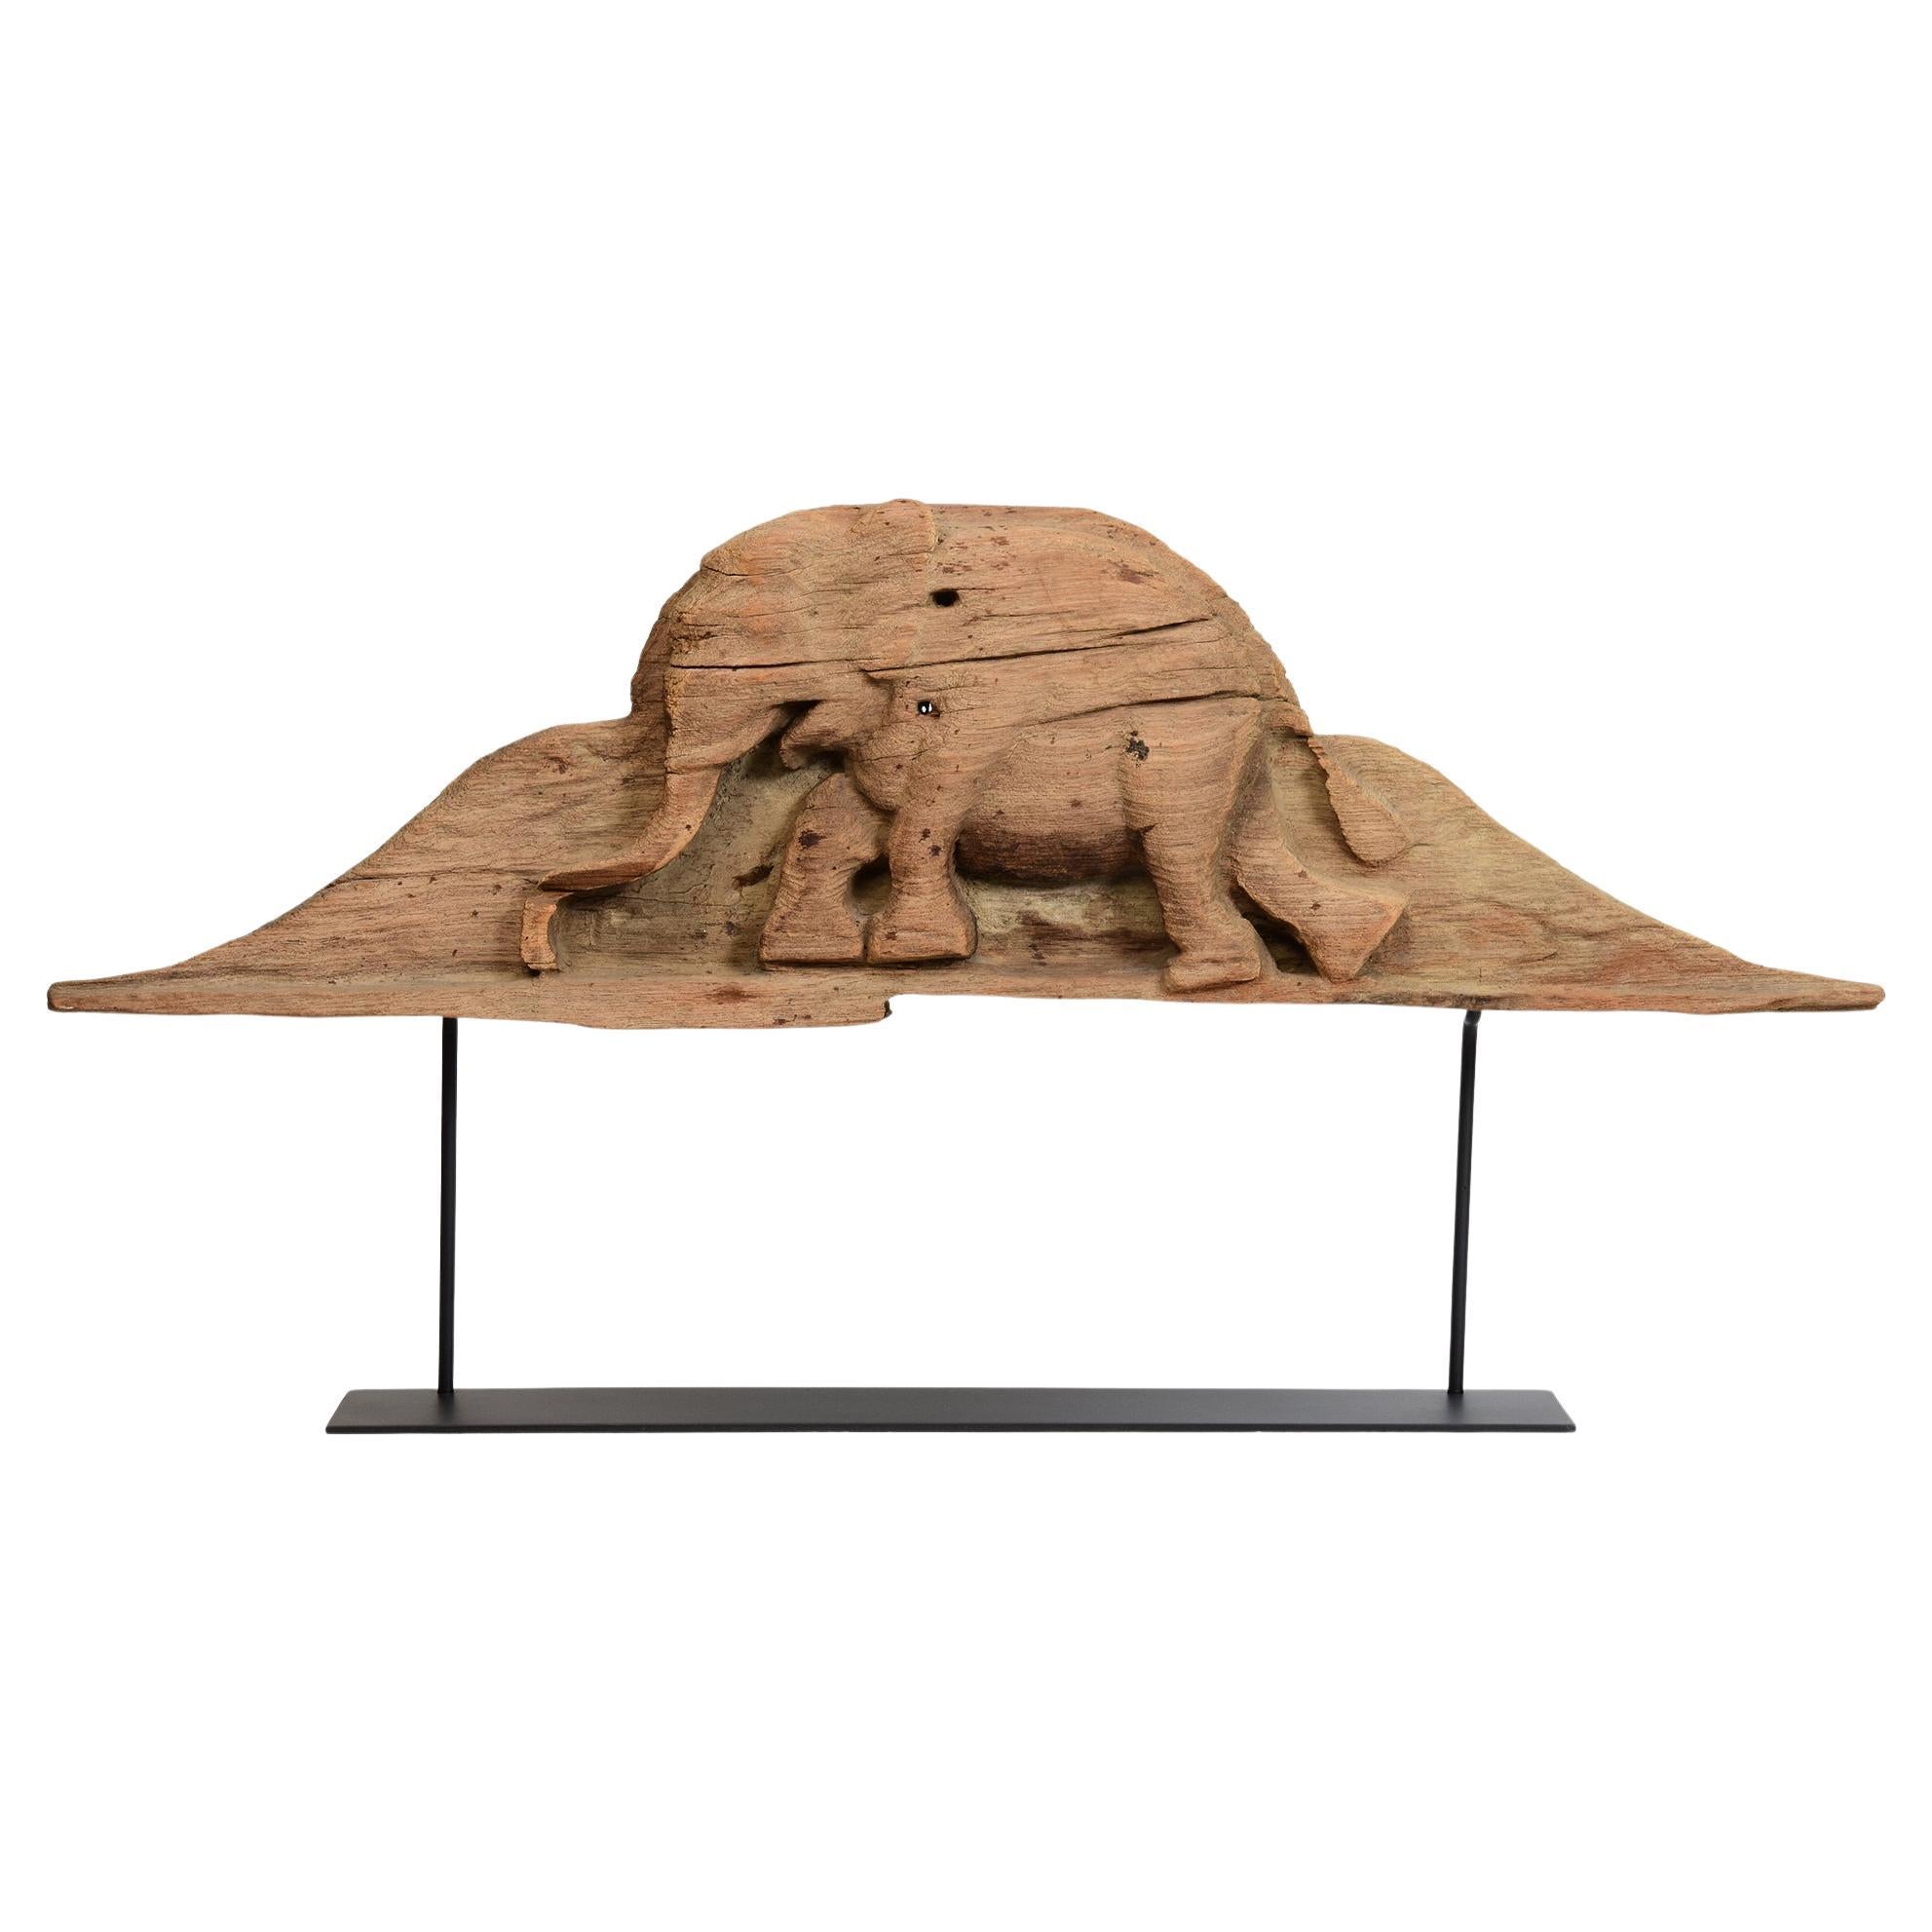 19th Century, Mandalay, Antique Burmese Wood Carving Panel with Animal Elephant